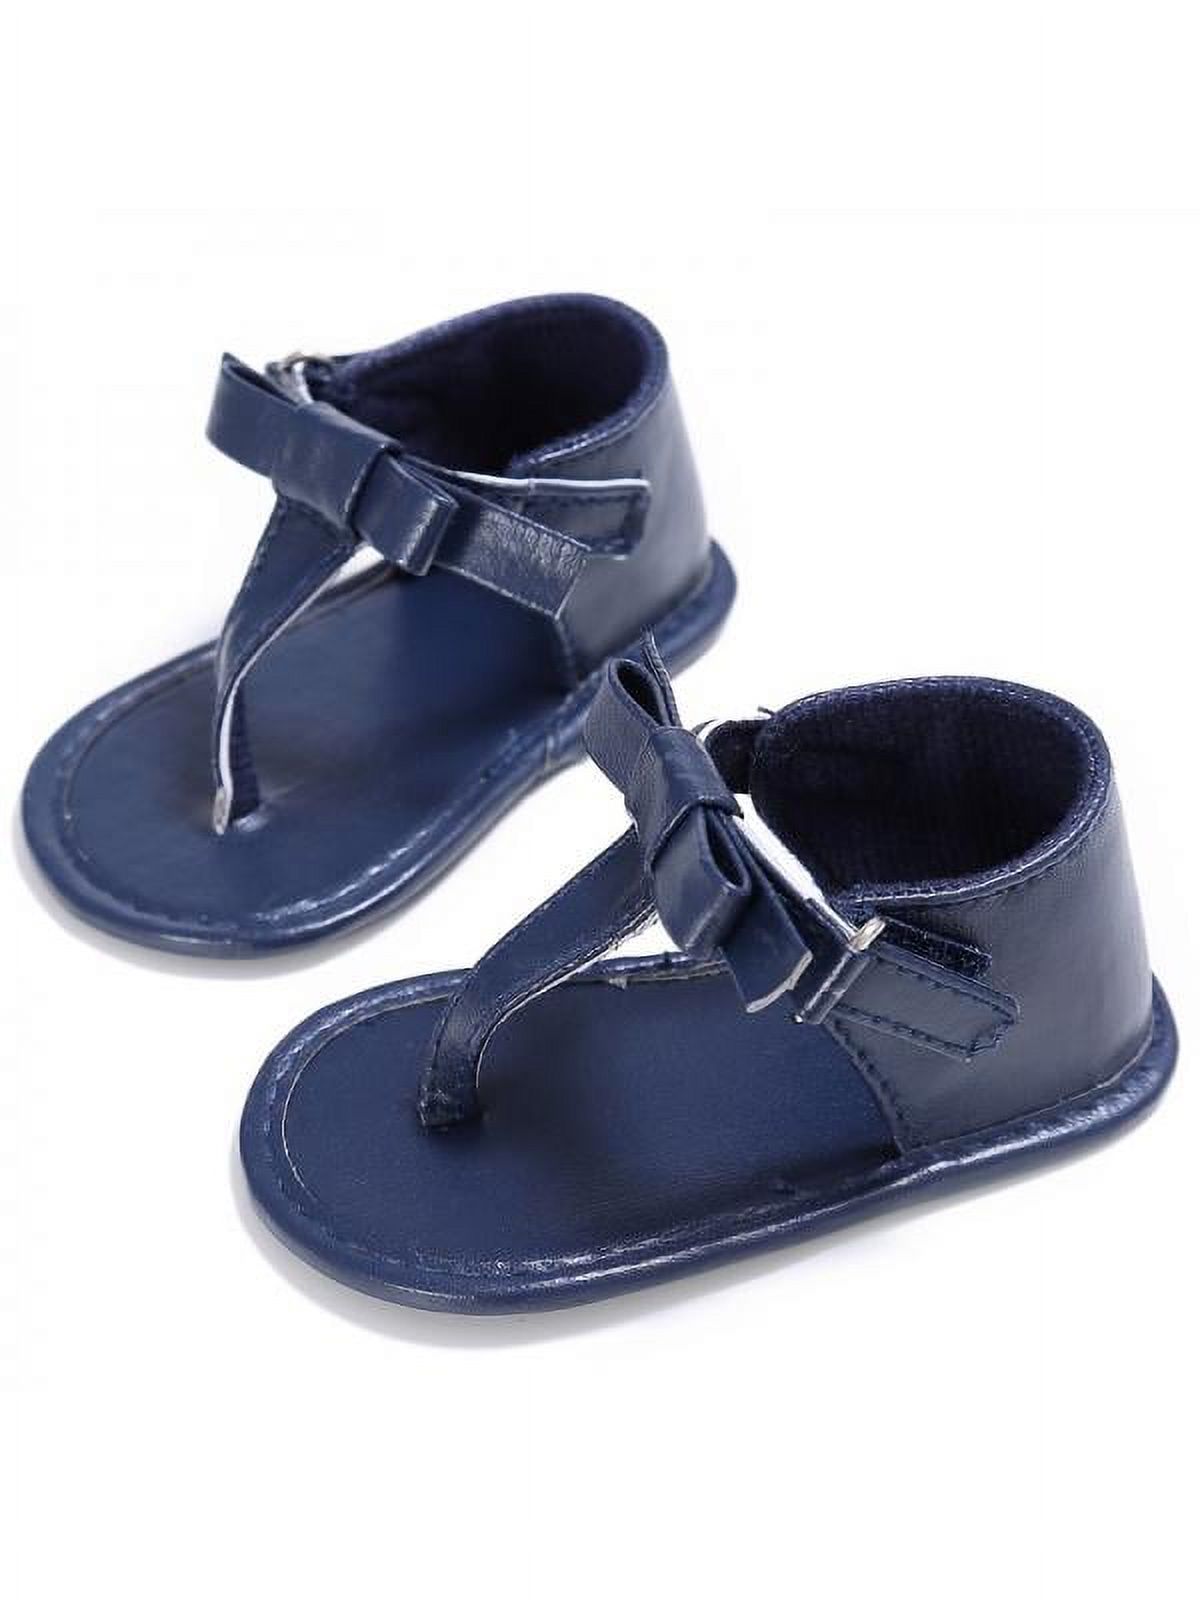 Ochine Newborn PU Leather Soft Shoes Summer Baby Casual Flower Toddler Prewalker Sandals - image 1 of 6